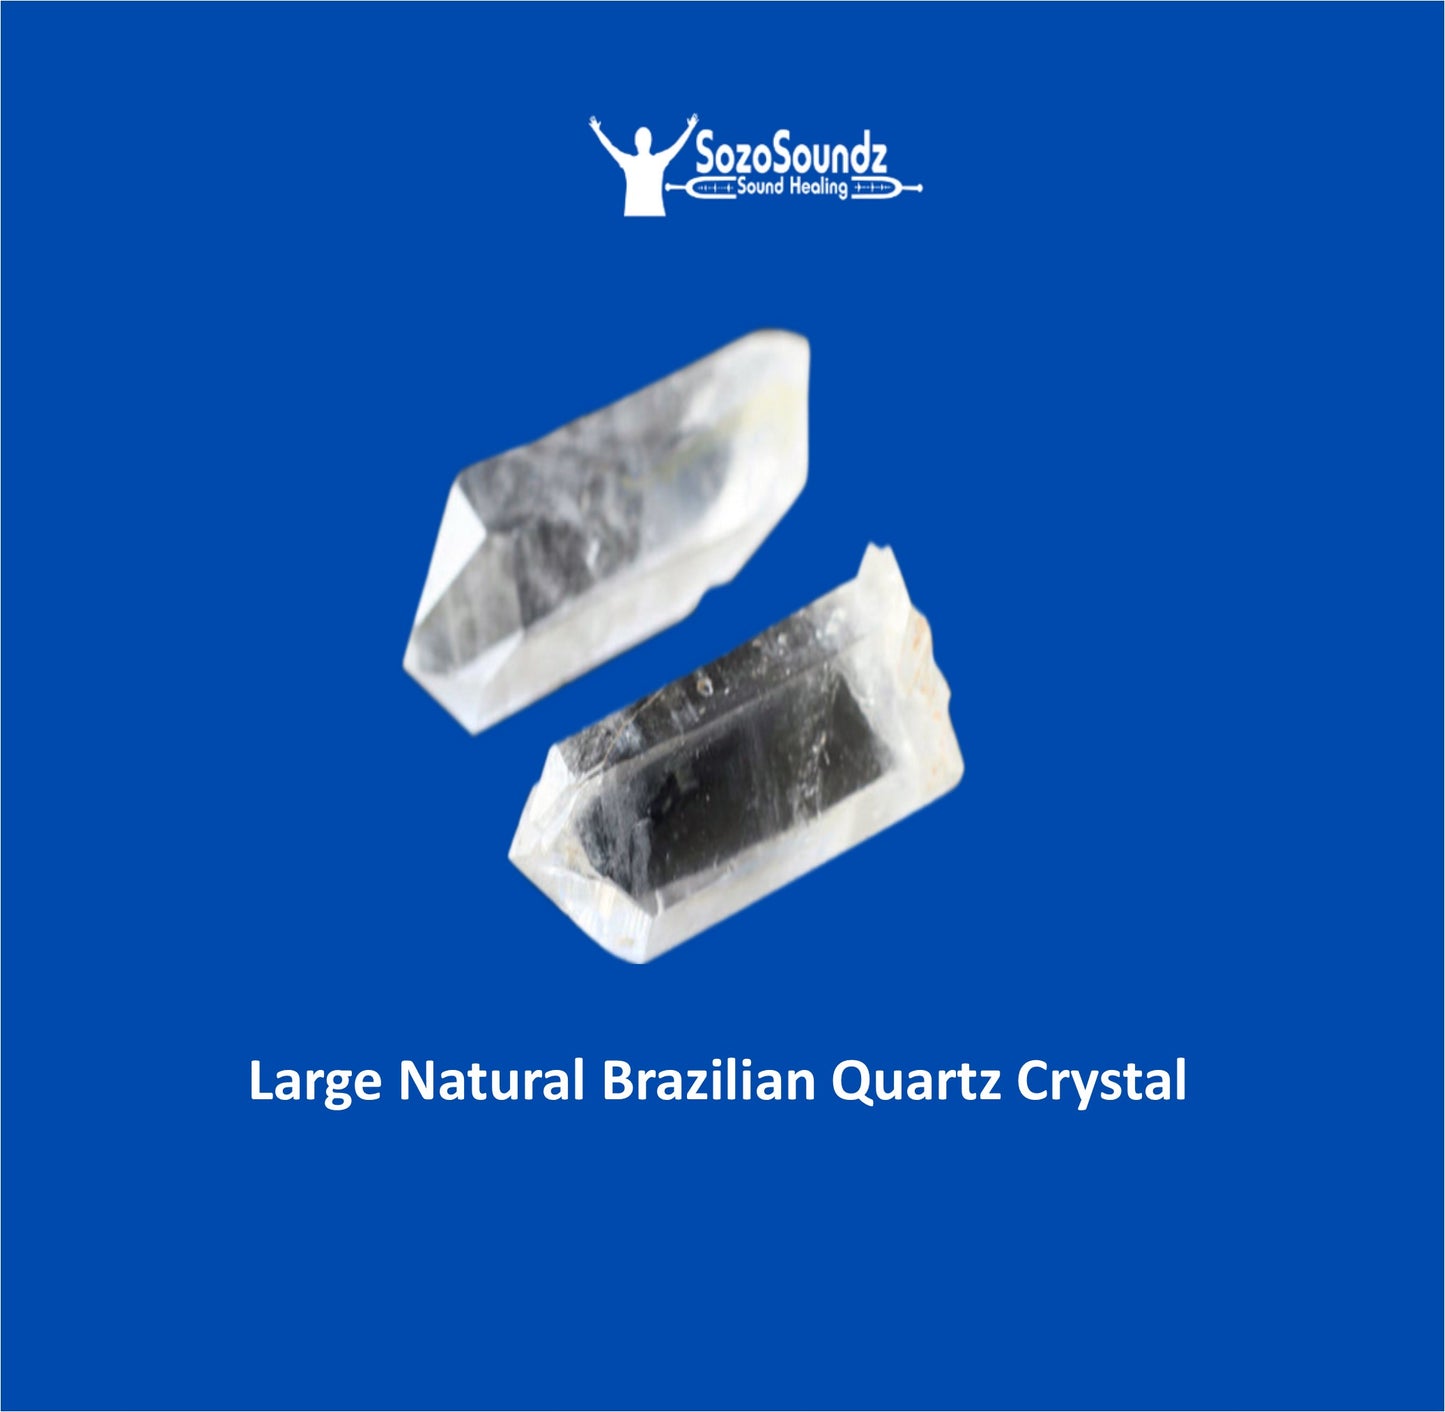 Large Natural Brazilian Quartz Crystal 1.5-2+ inches